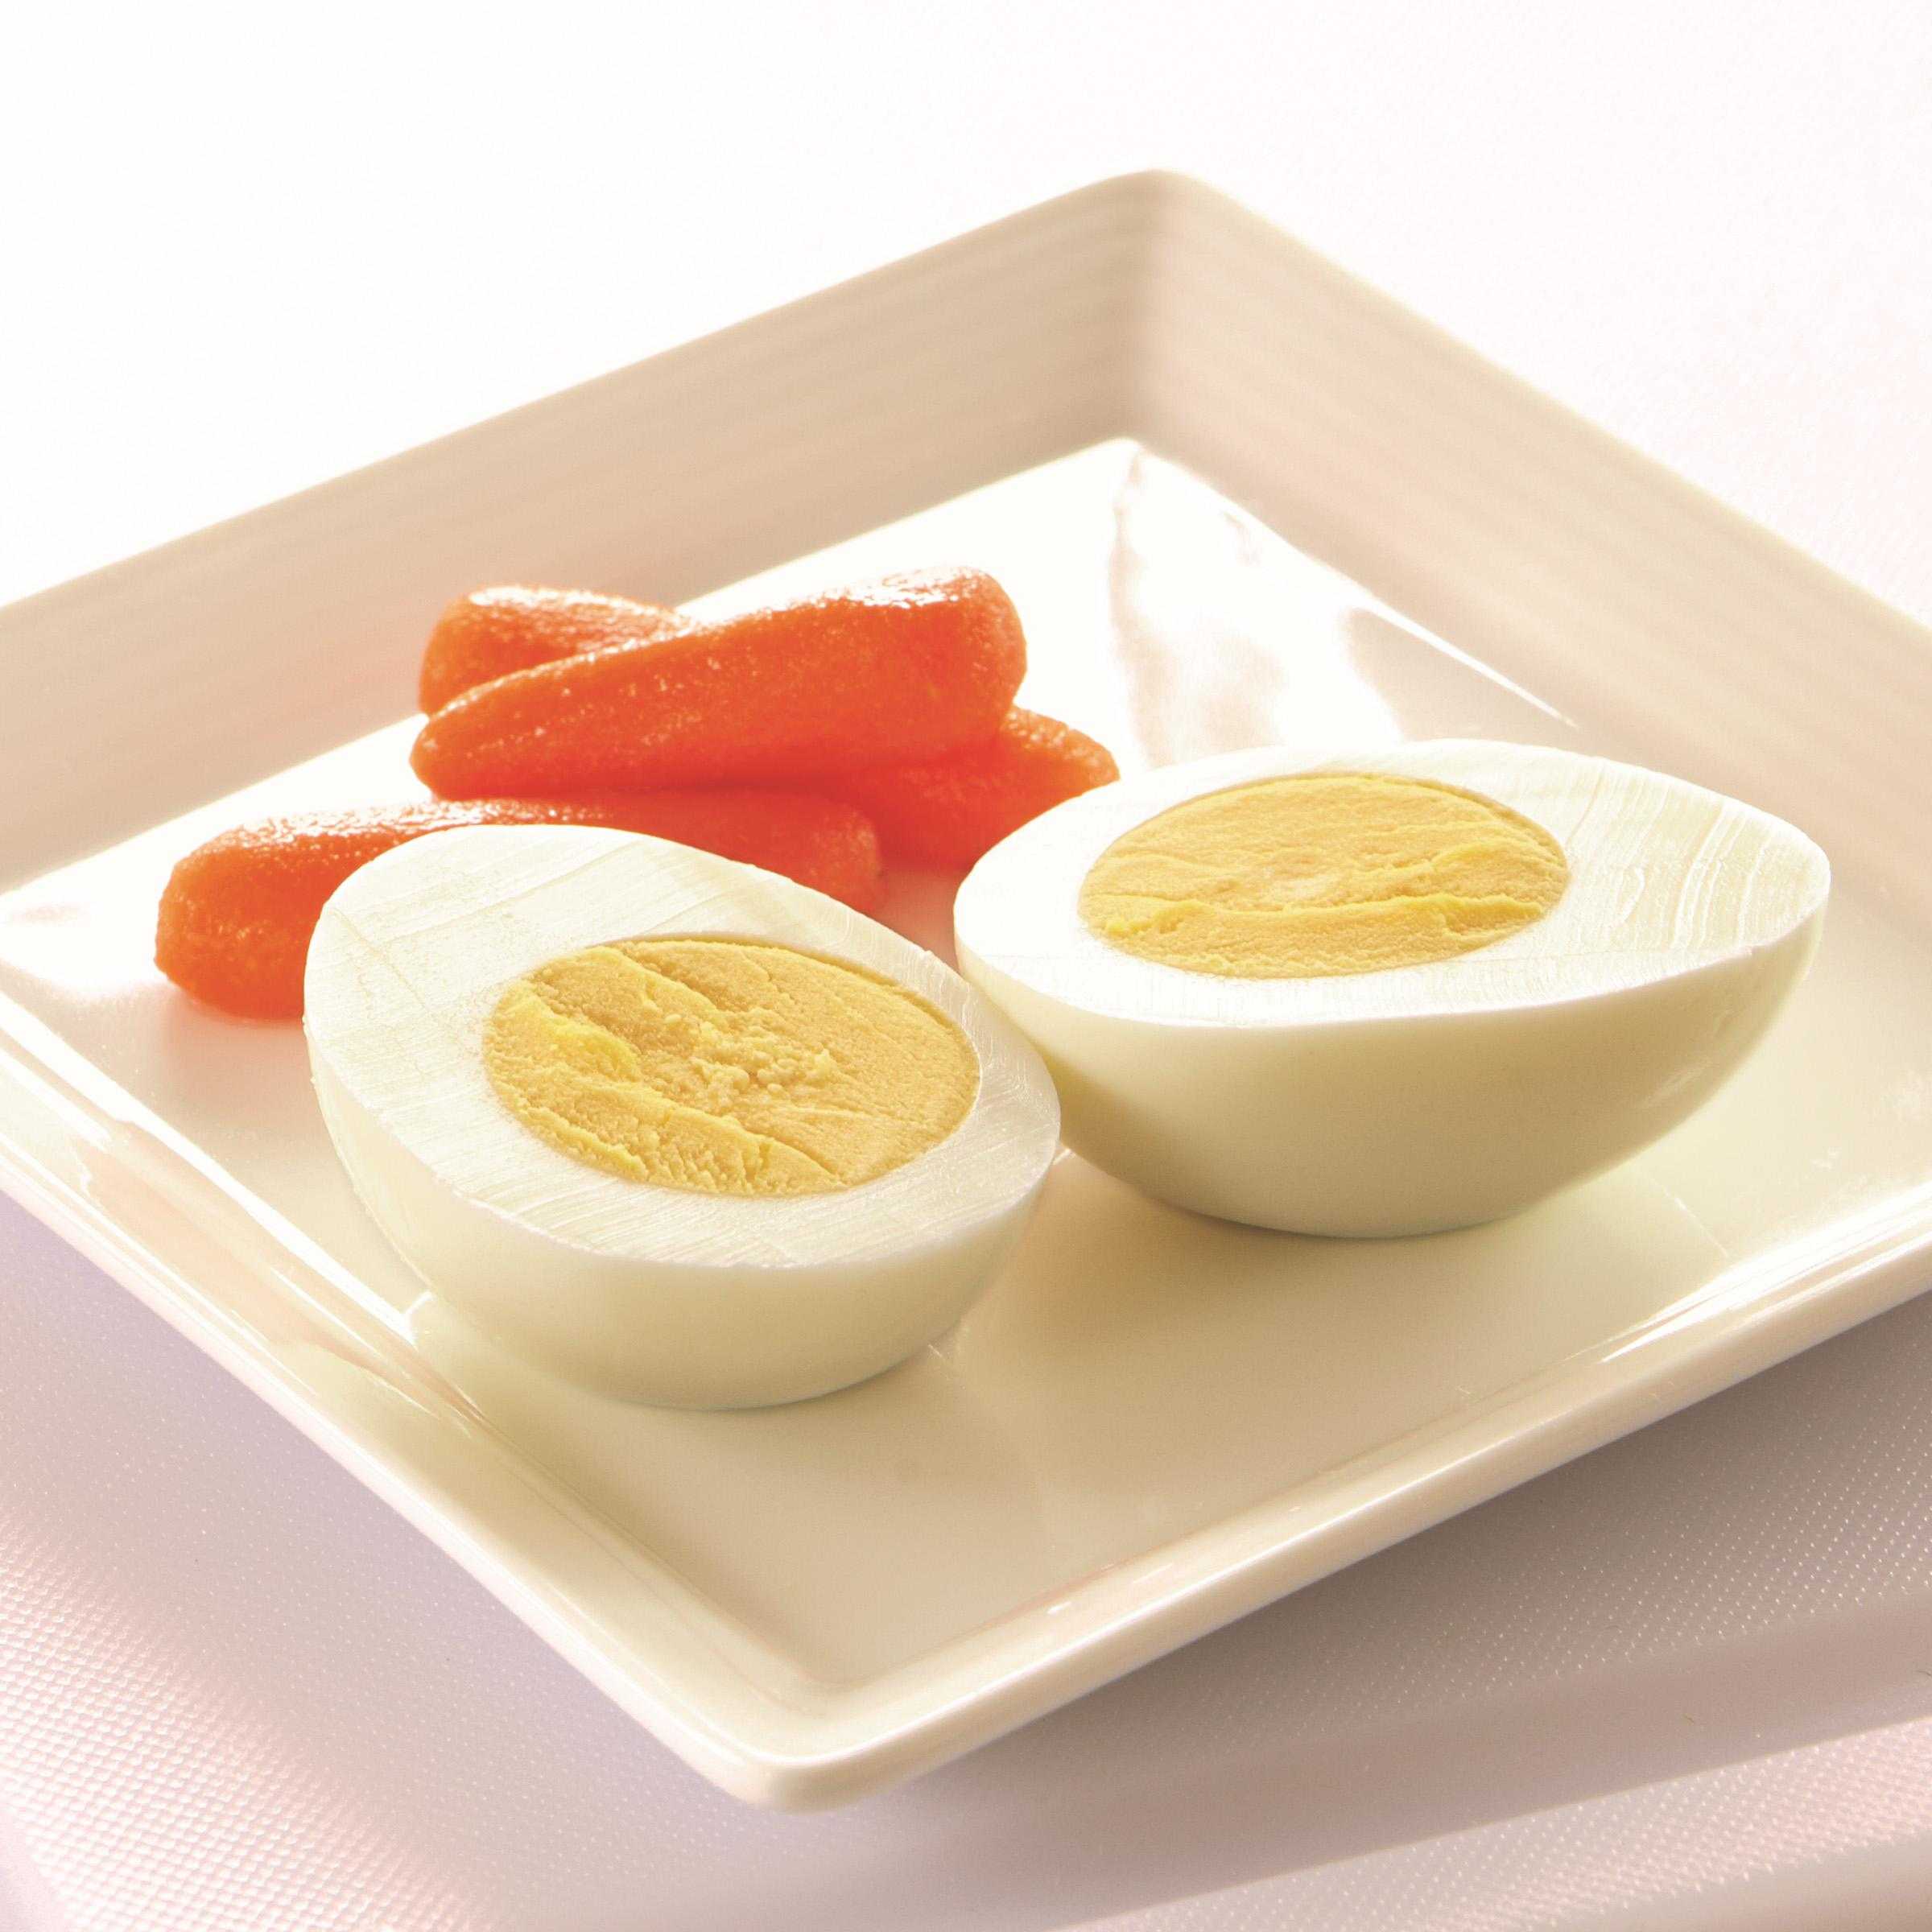 Easy Eggs® Peeled Hard Cooked Eggs, 14/2 Count Grab 'N Go Dry Pack